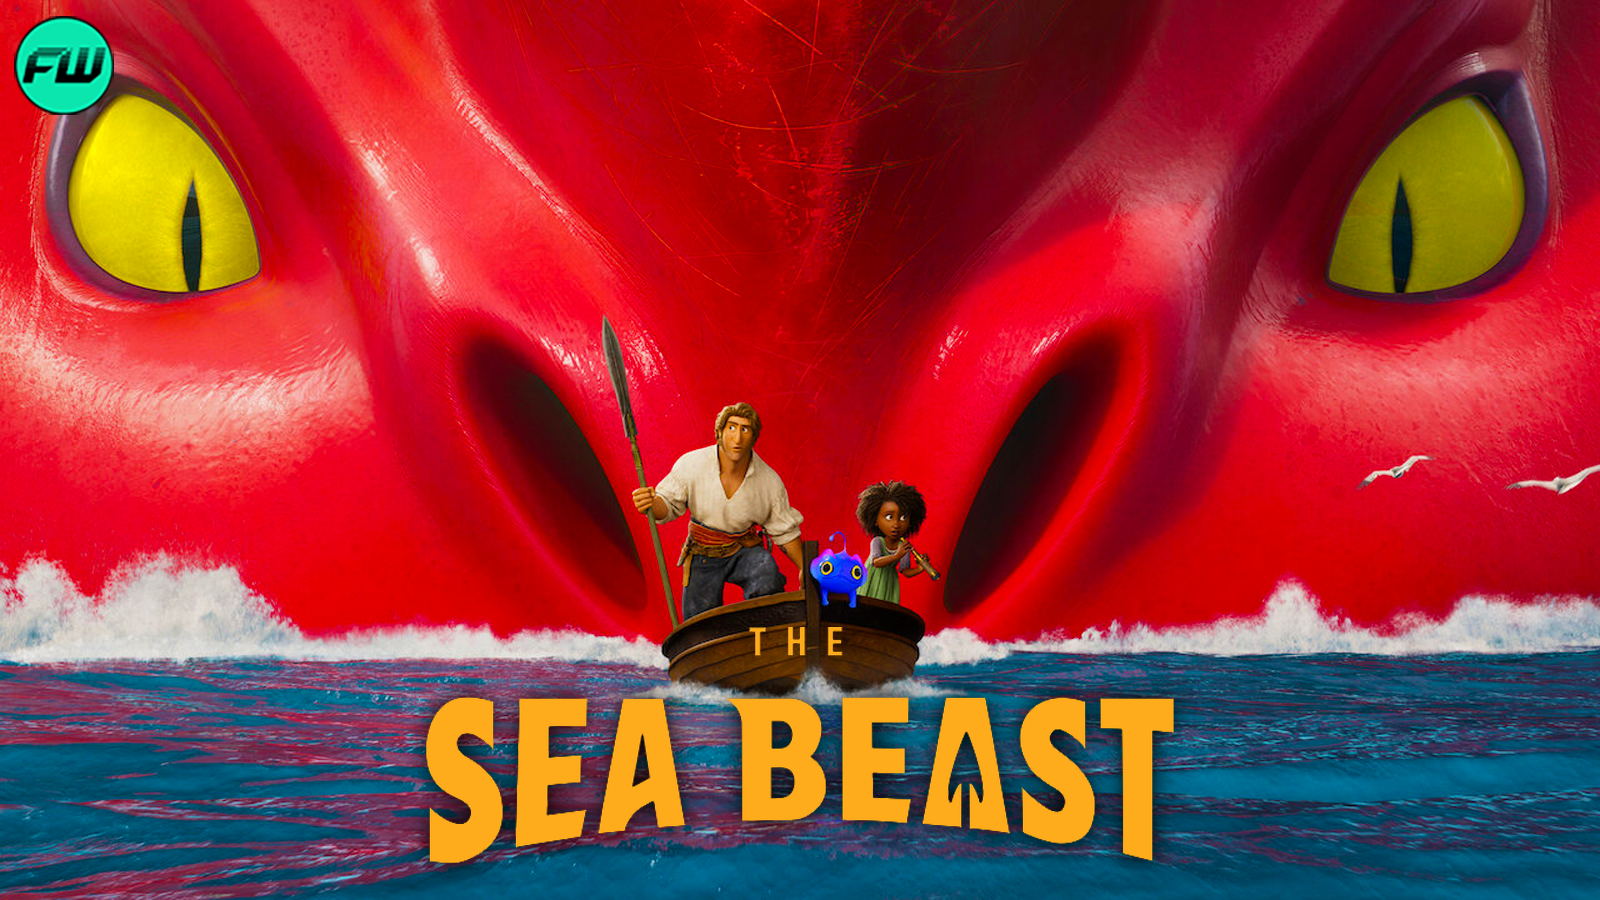 The Sea Beast: Cast & Director Talk Netflix’s Animated Film